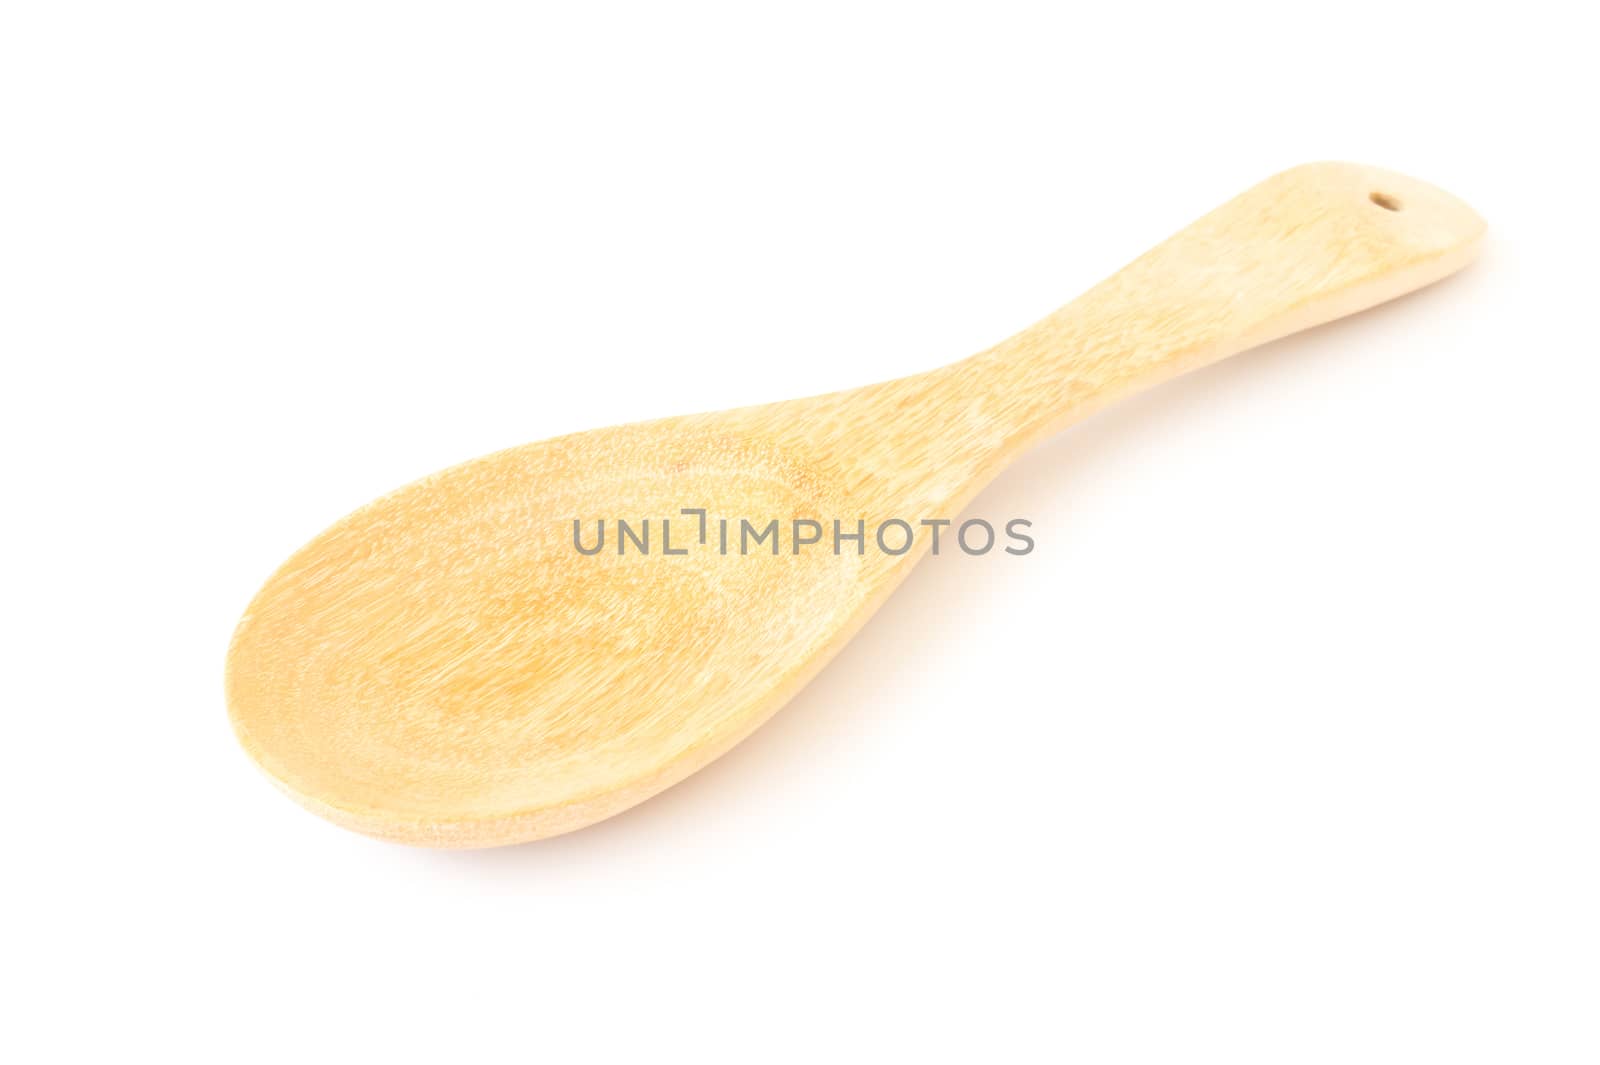 Empty wooden spoon on white background by pt.pongsak@gmail.com